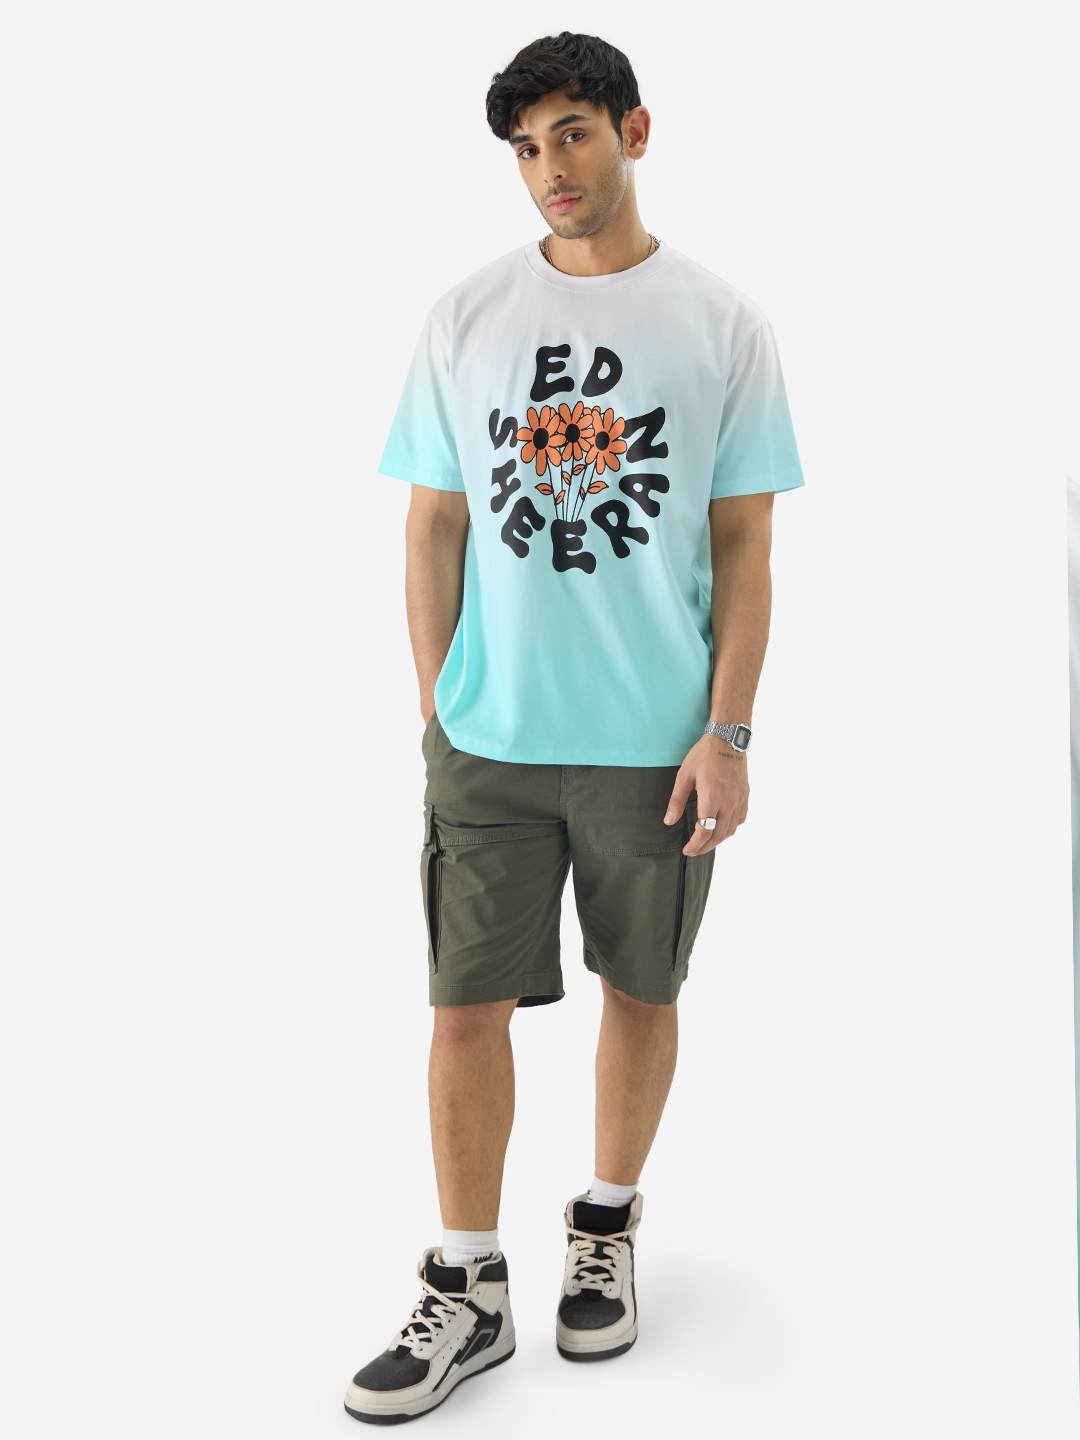 Men's Ed Sheeran: FlowerT-Shirts